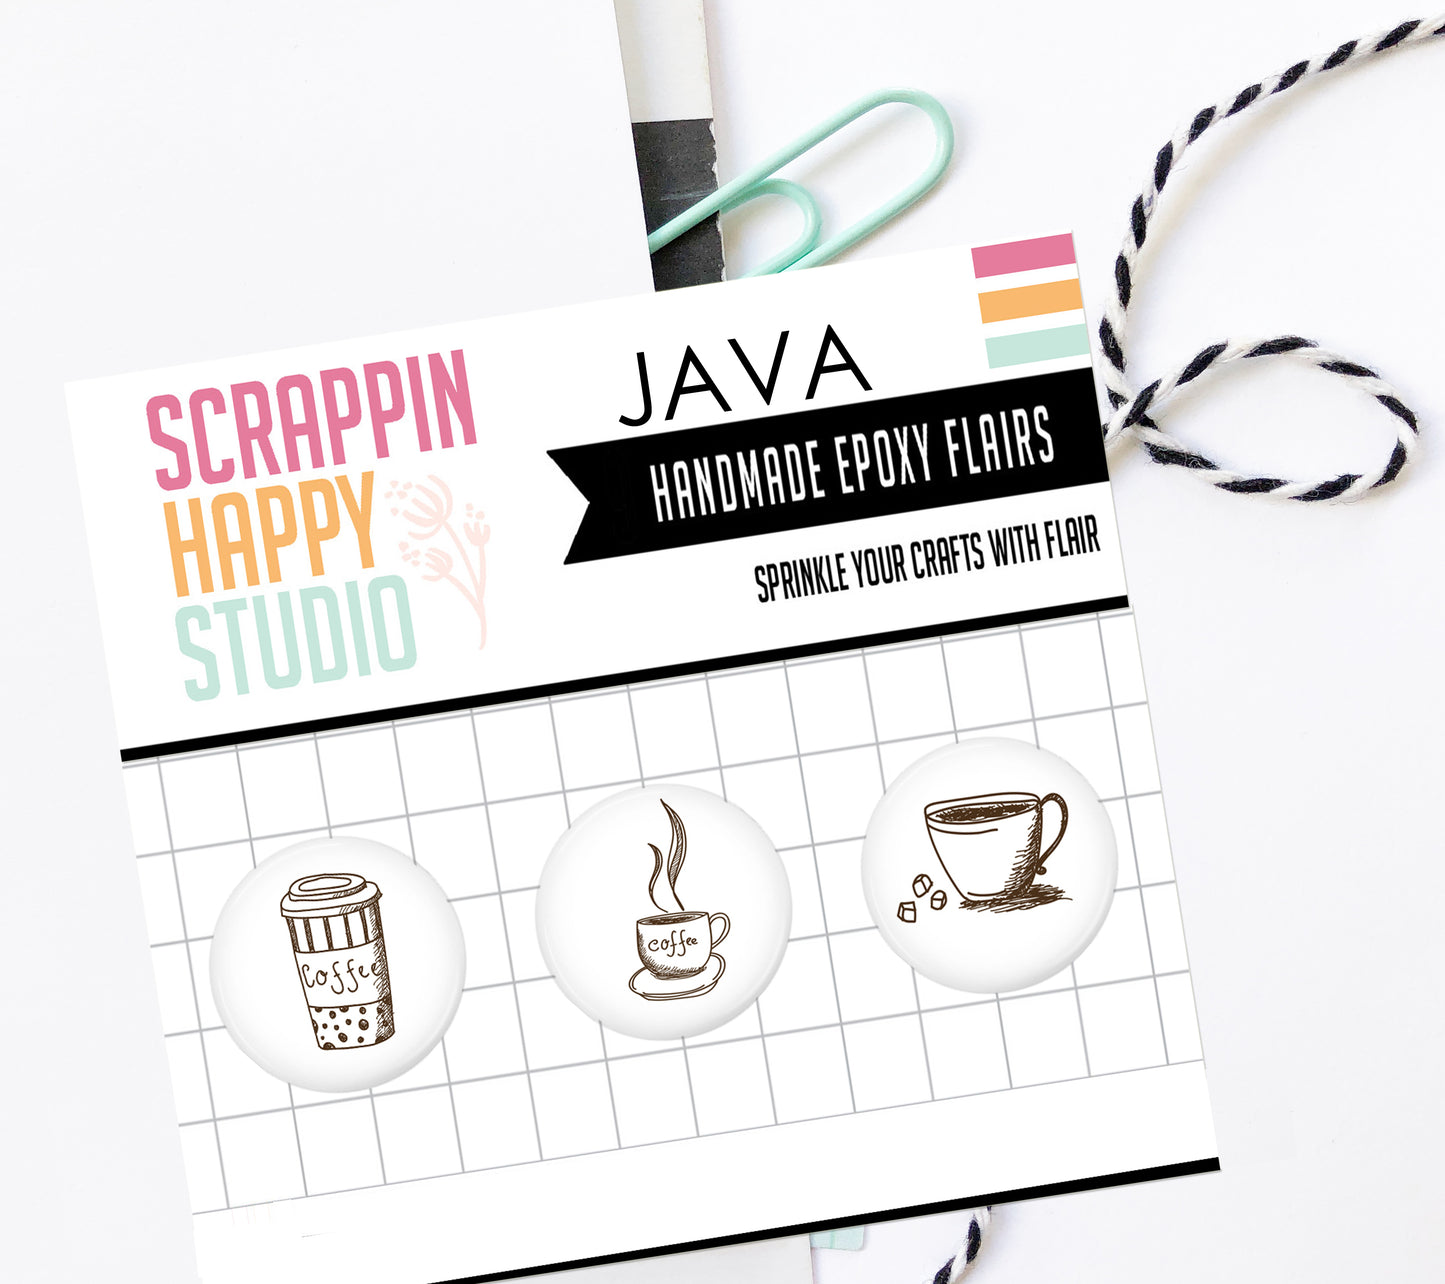 Java Epoxy Flair Coffee